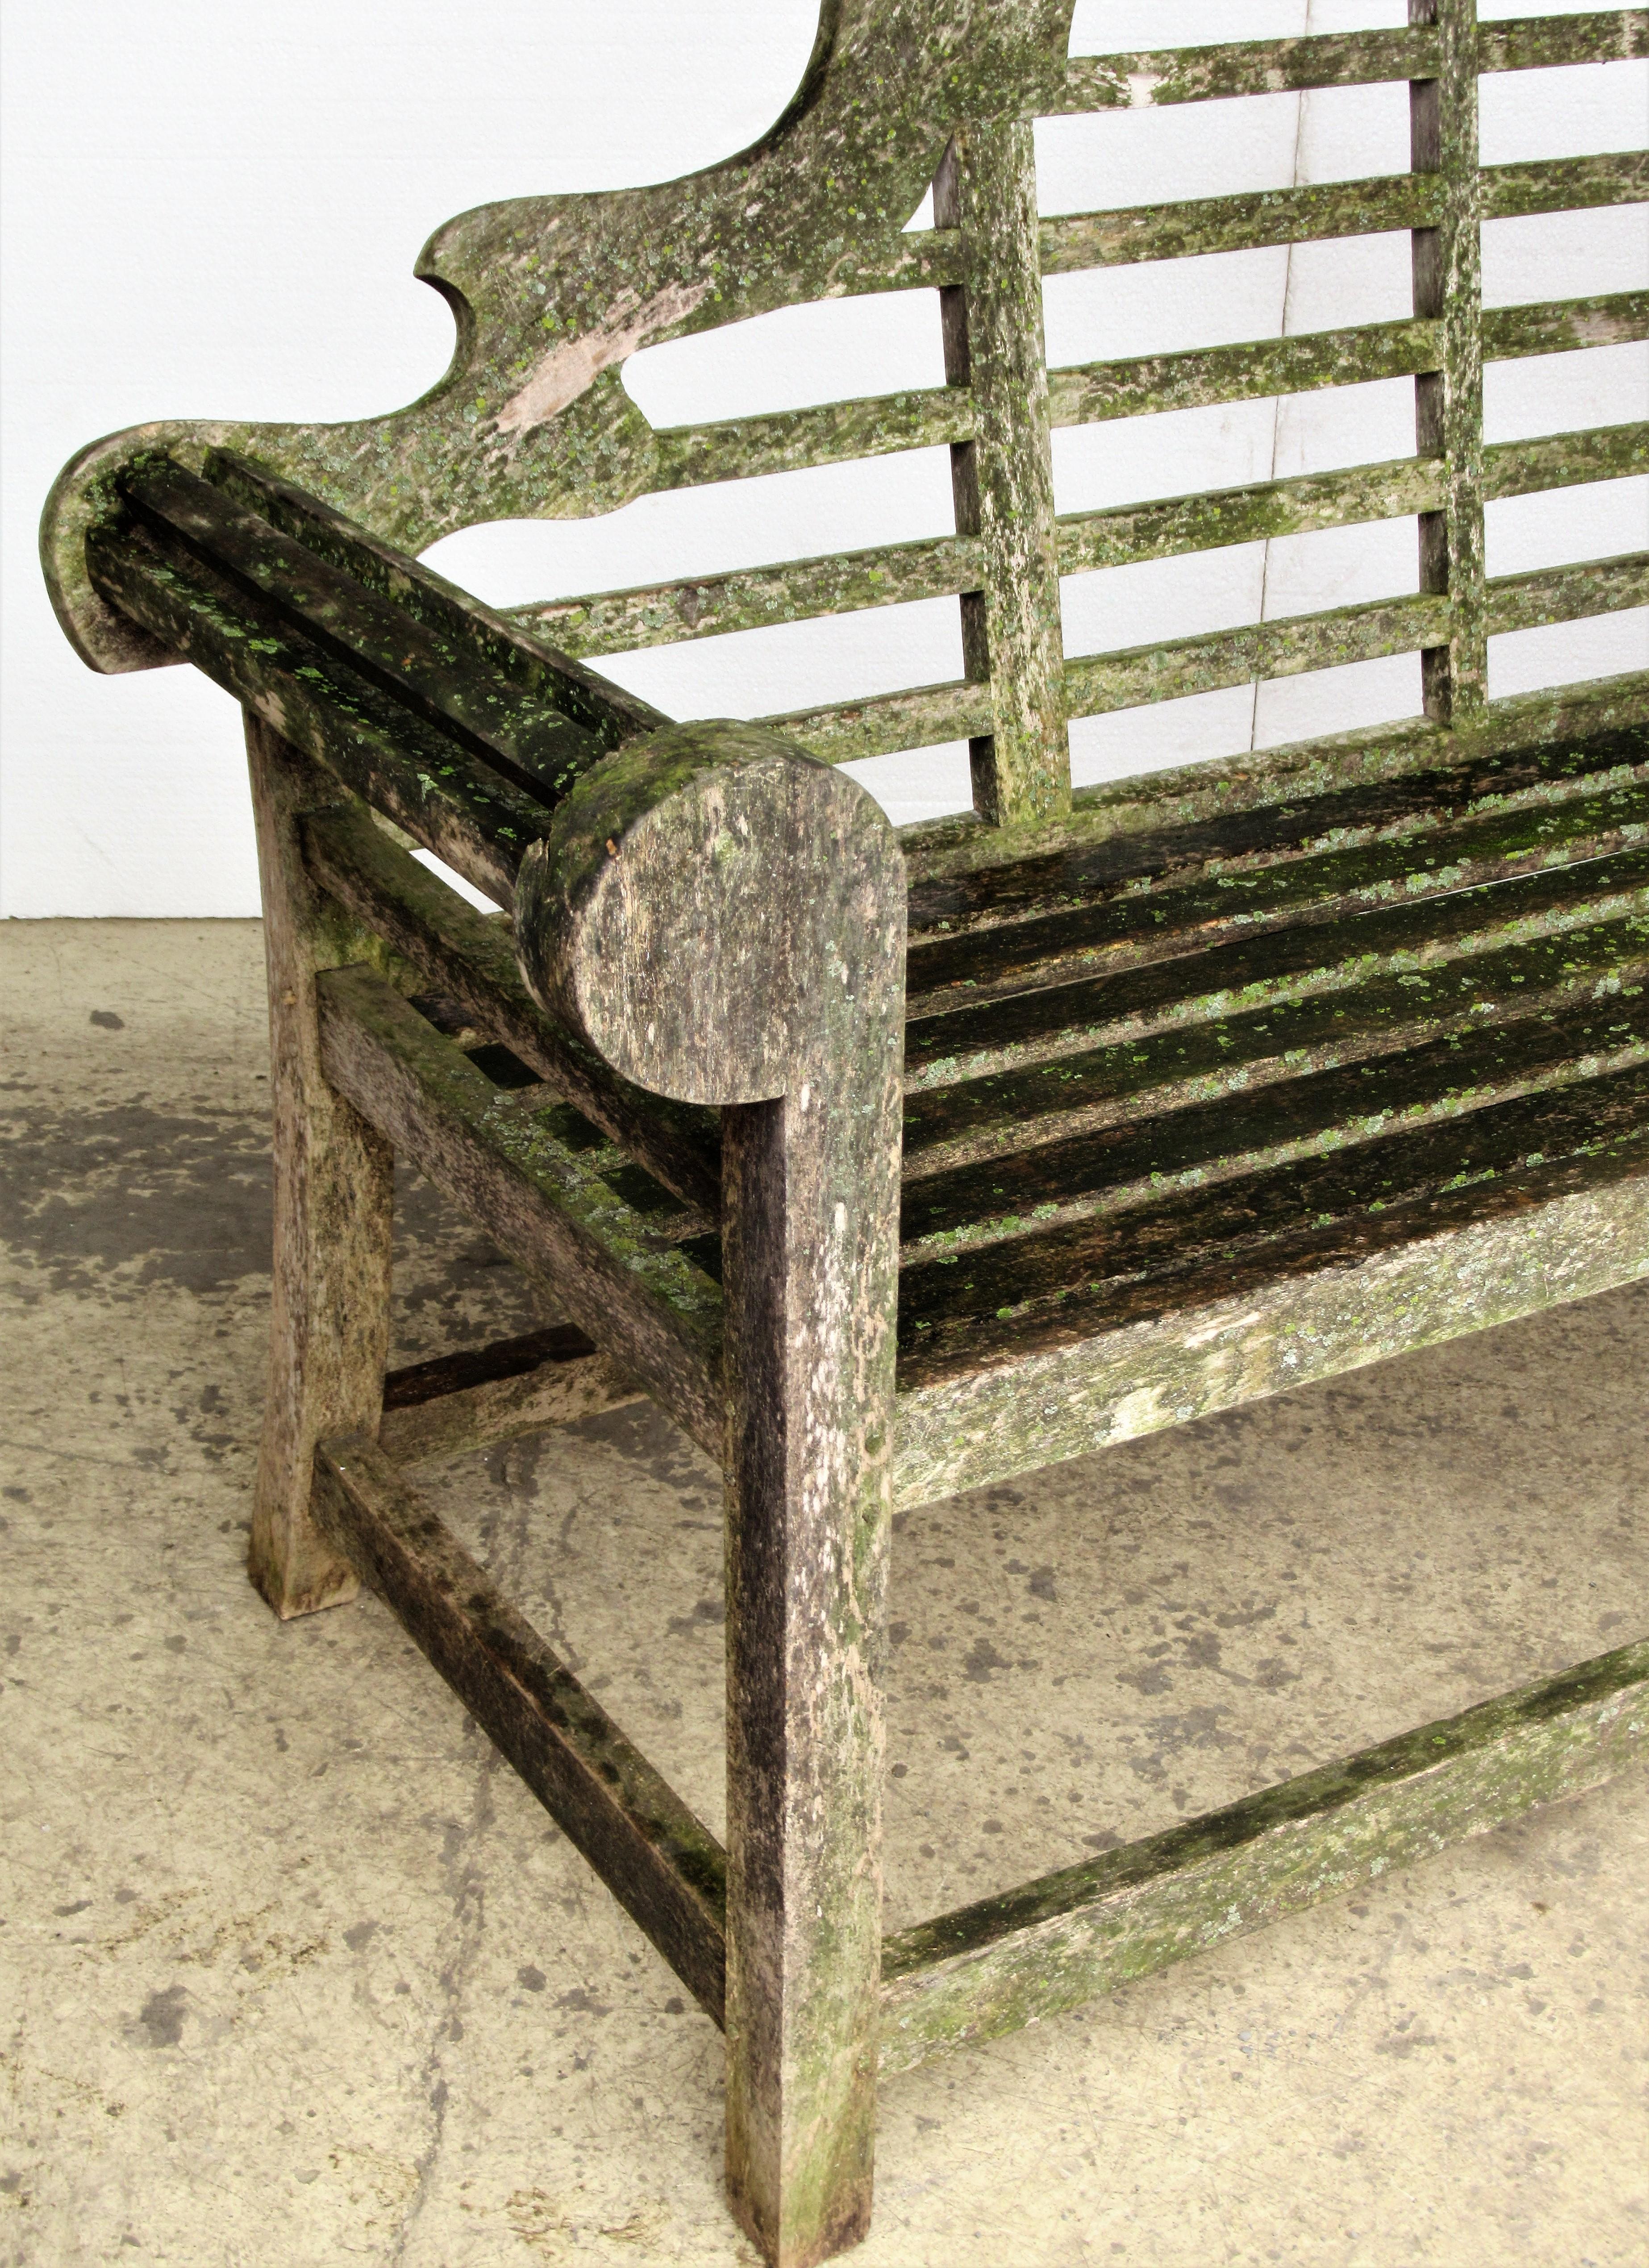 Edwardian Weathered Teak Lutyens Style Garden Bench Encrusted with Algae Lichen